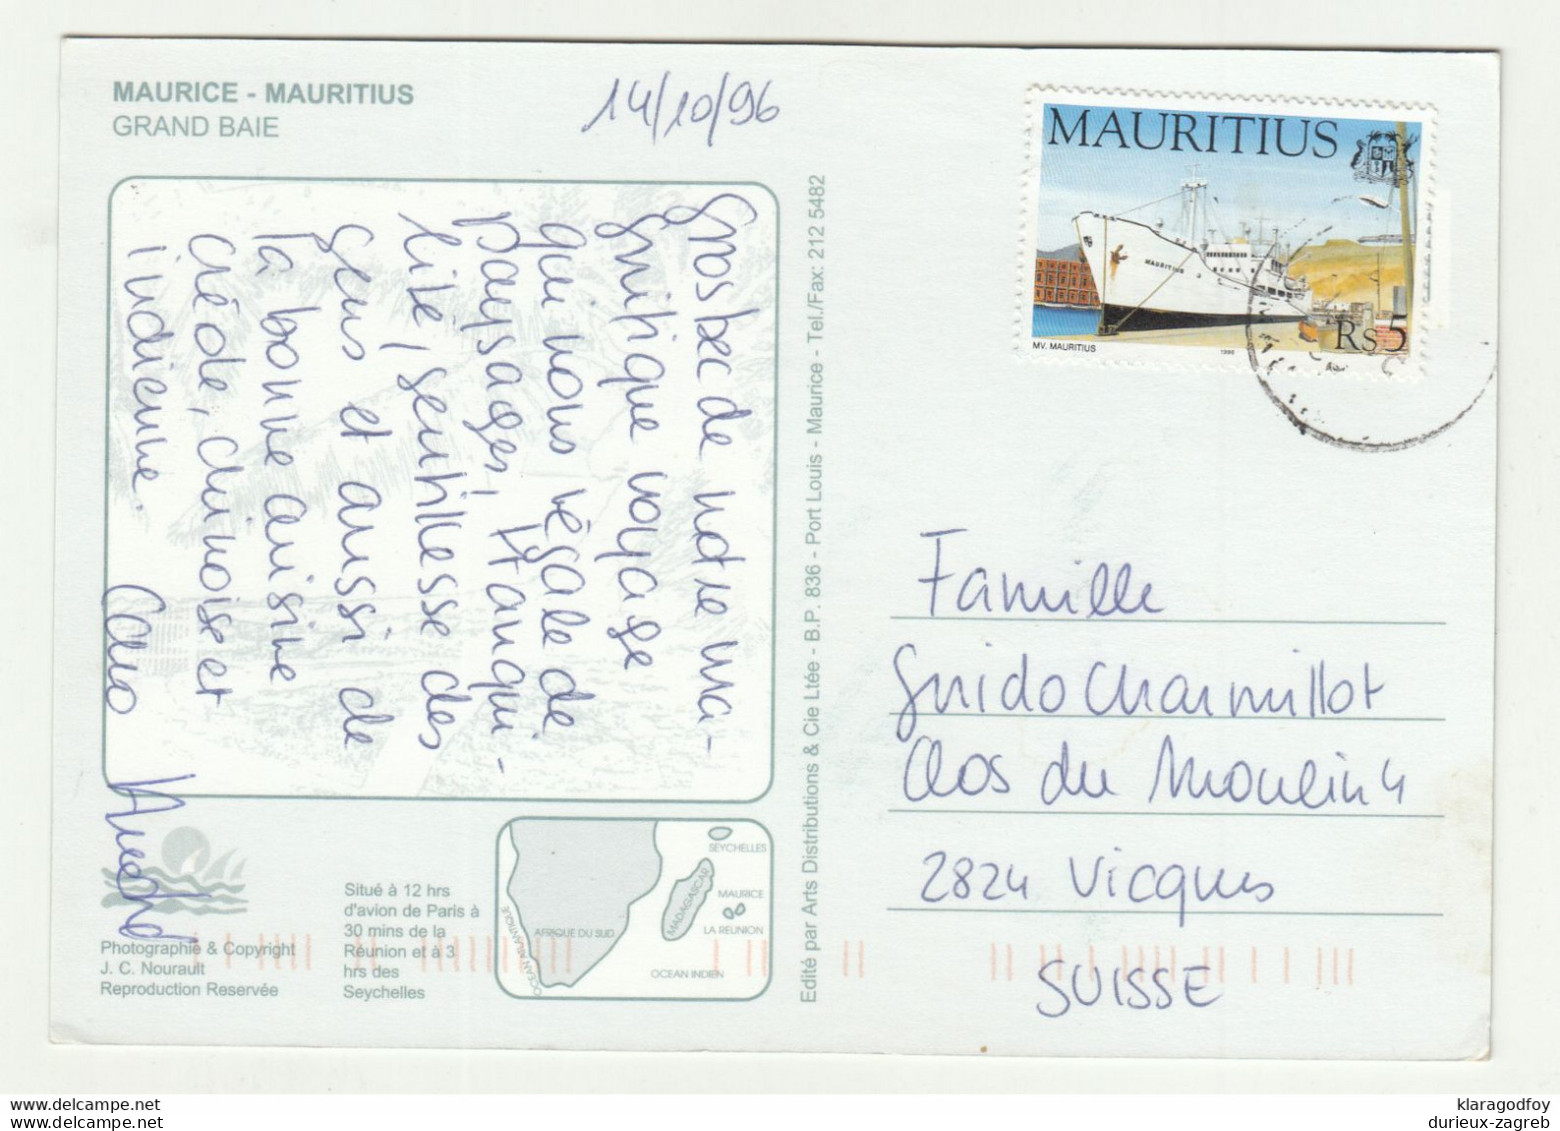 Mauritius Postcard Posted 1996 B210901 - Maurice